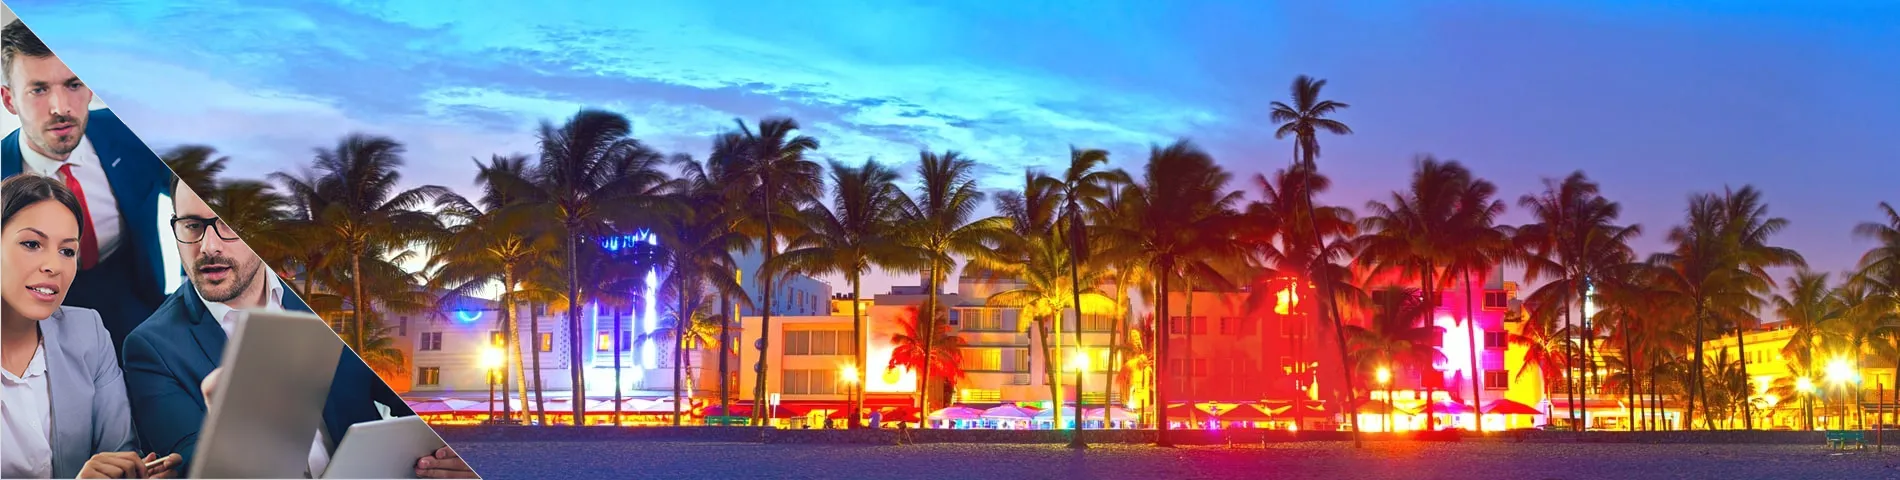 Miami - Yhdistetty perus & business